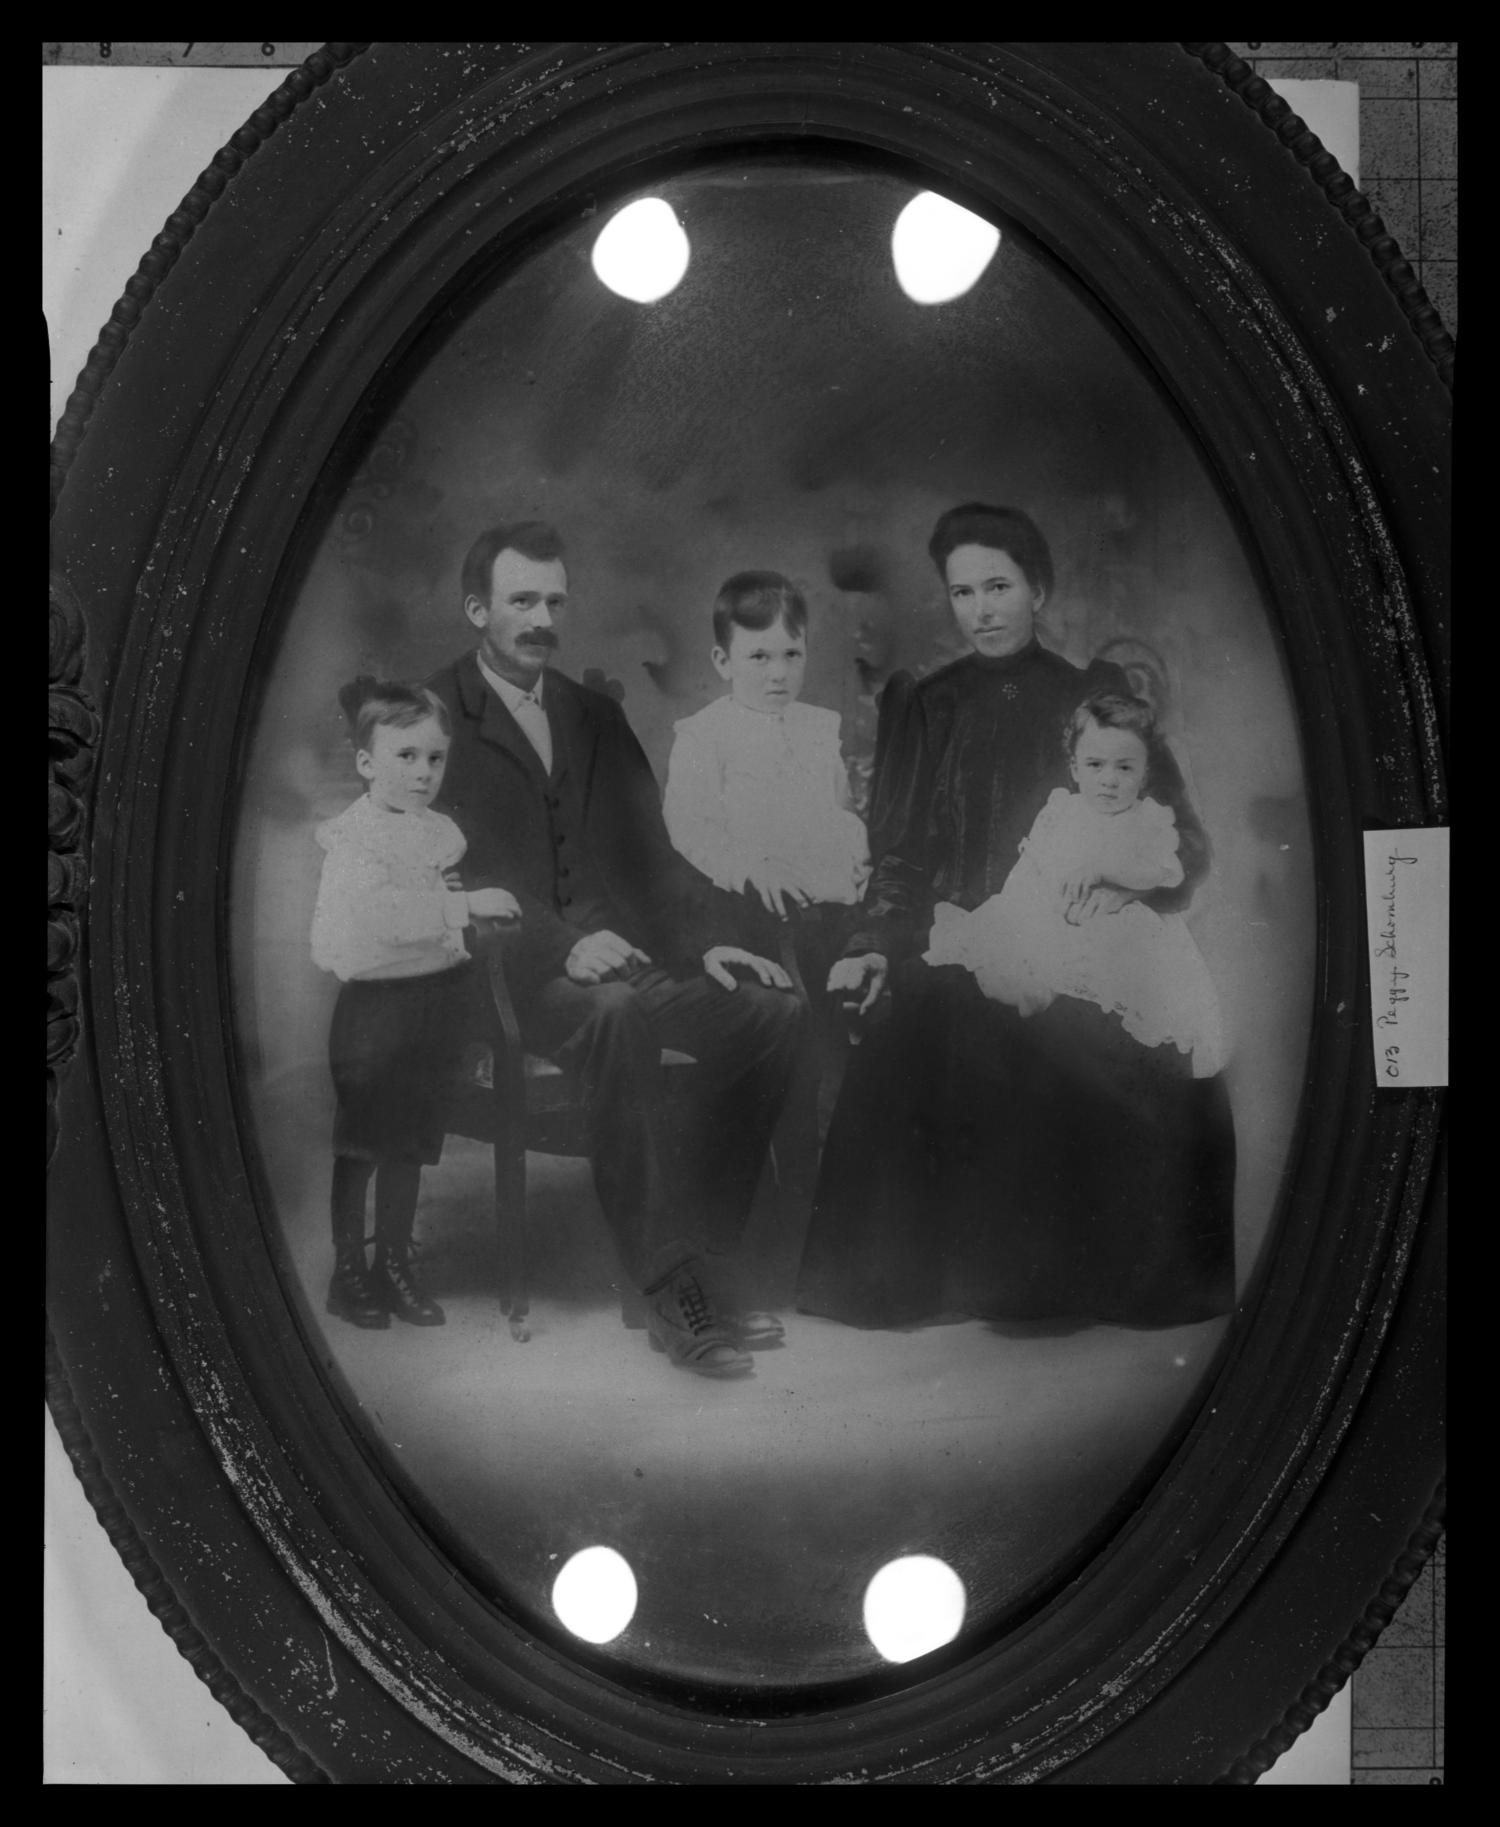 Bram Family Portrait
                                                
                                                    [Sequence #]: 1 of 1
                                                